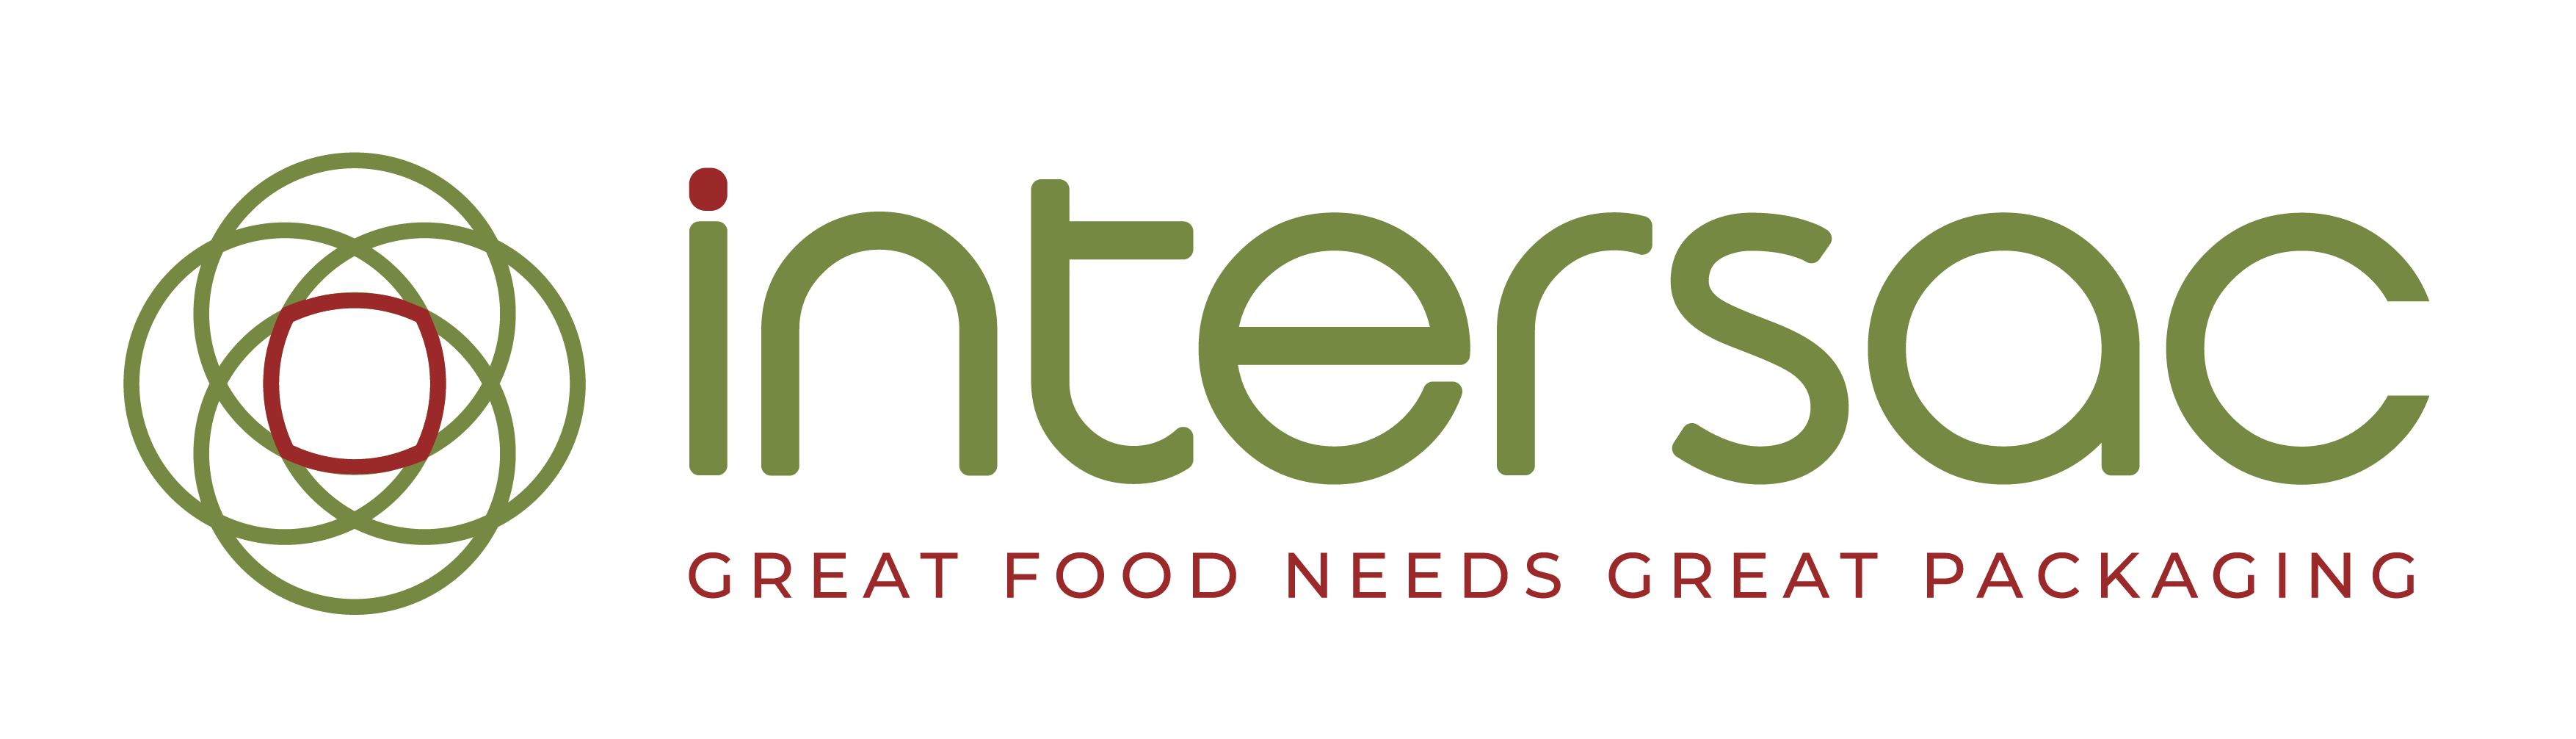 INTERSAC_logo-01 (2)